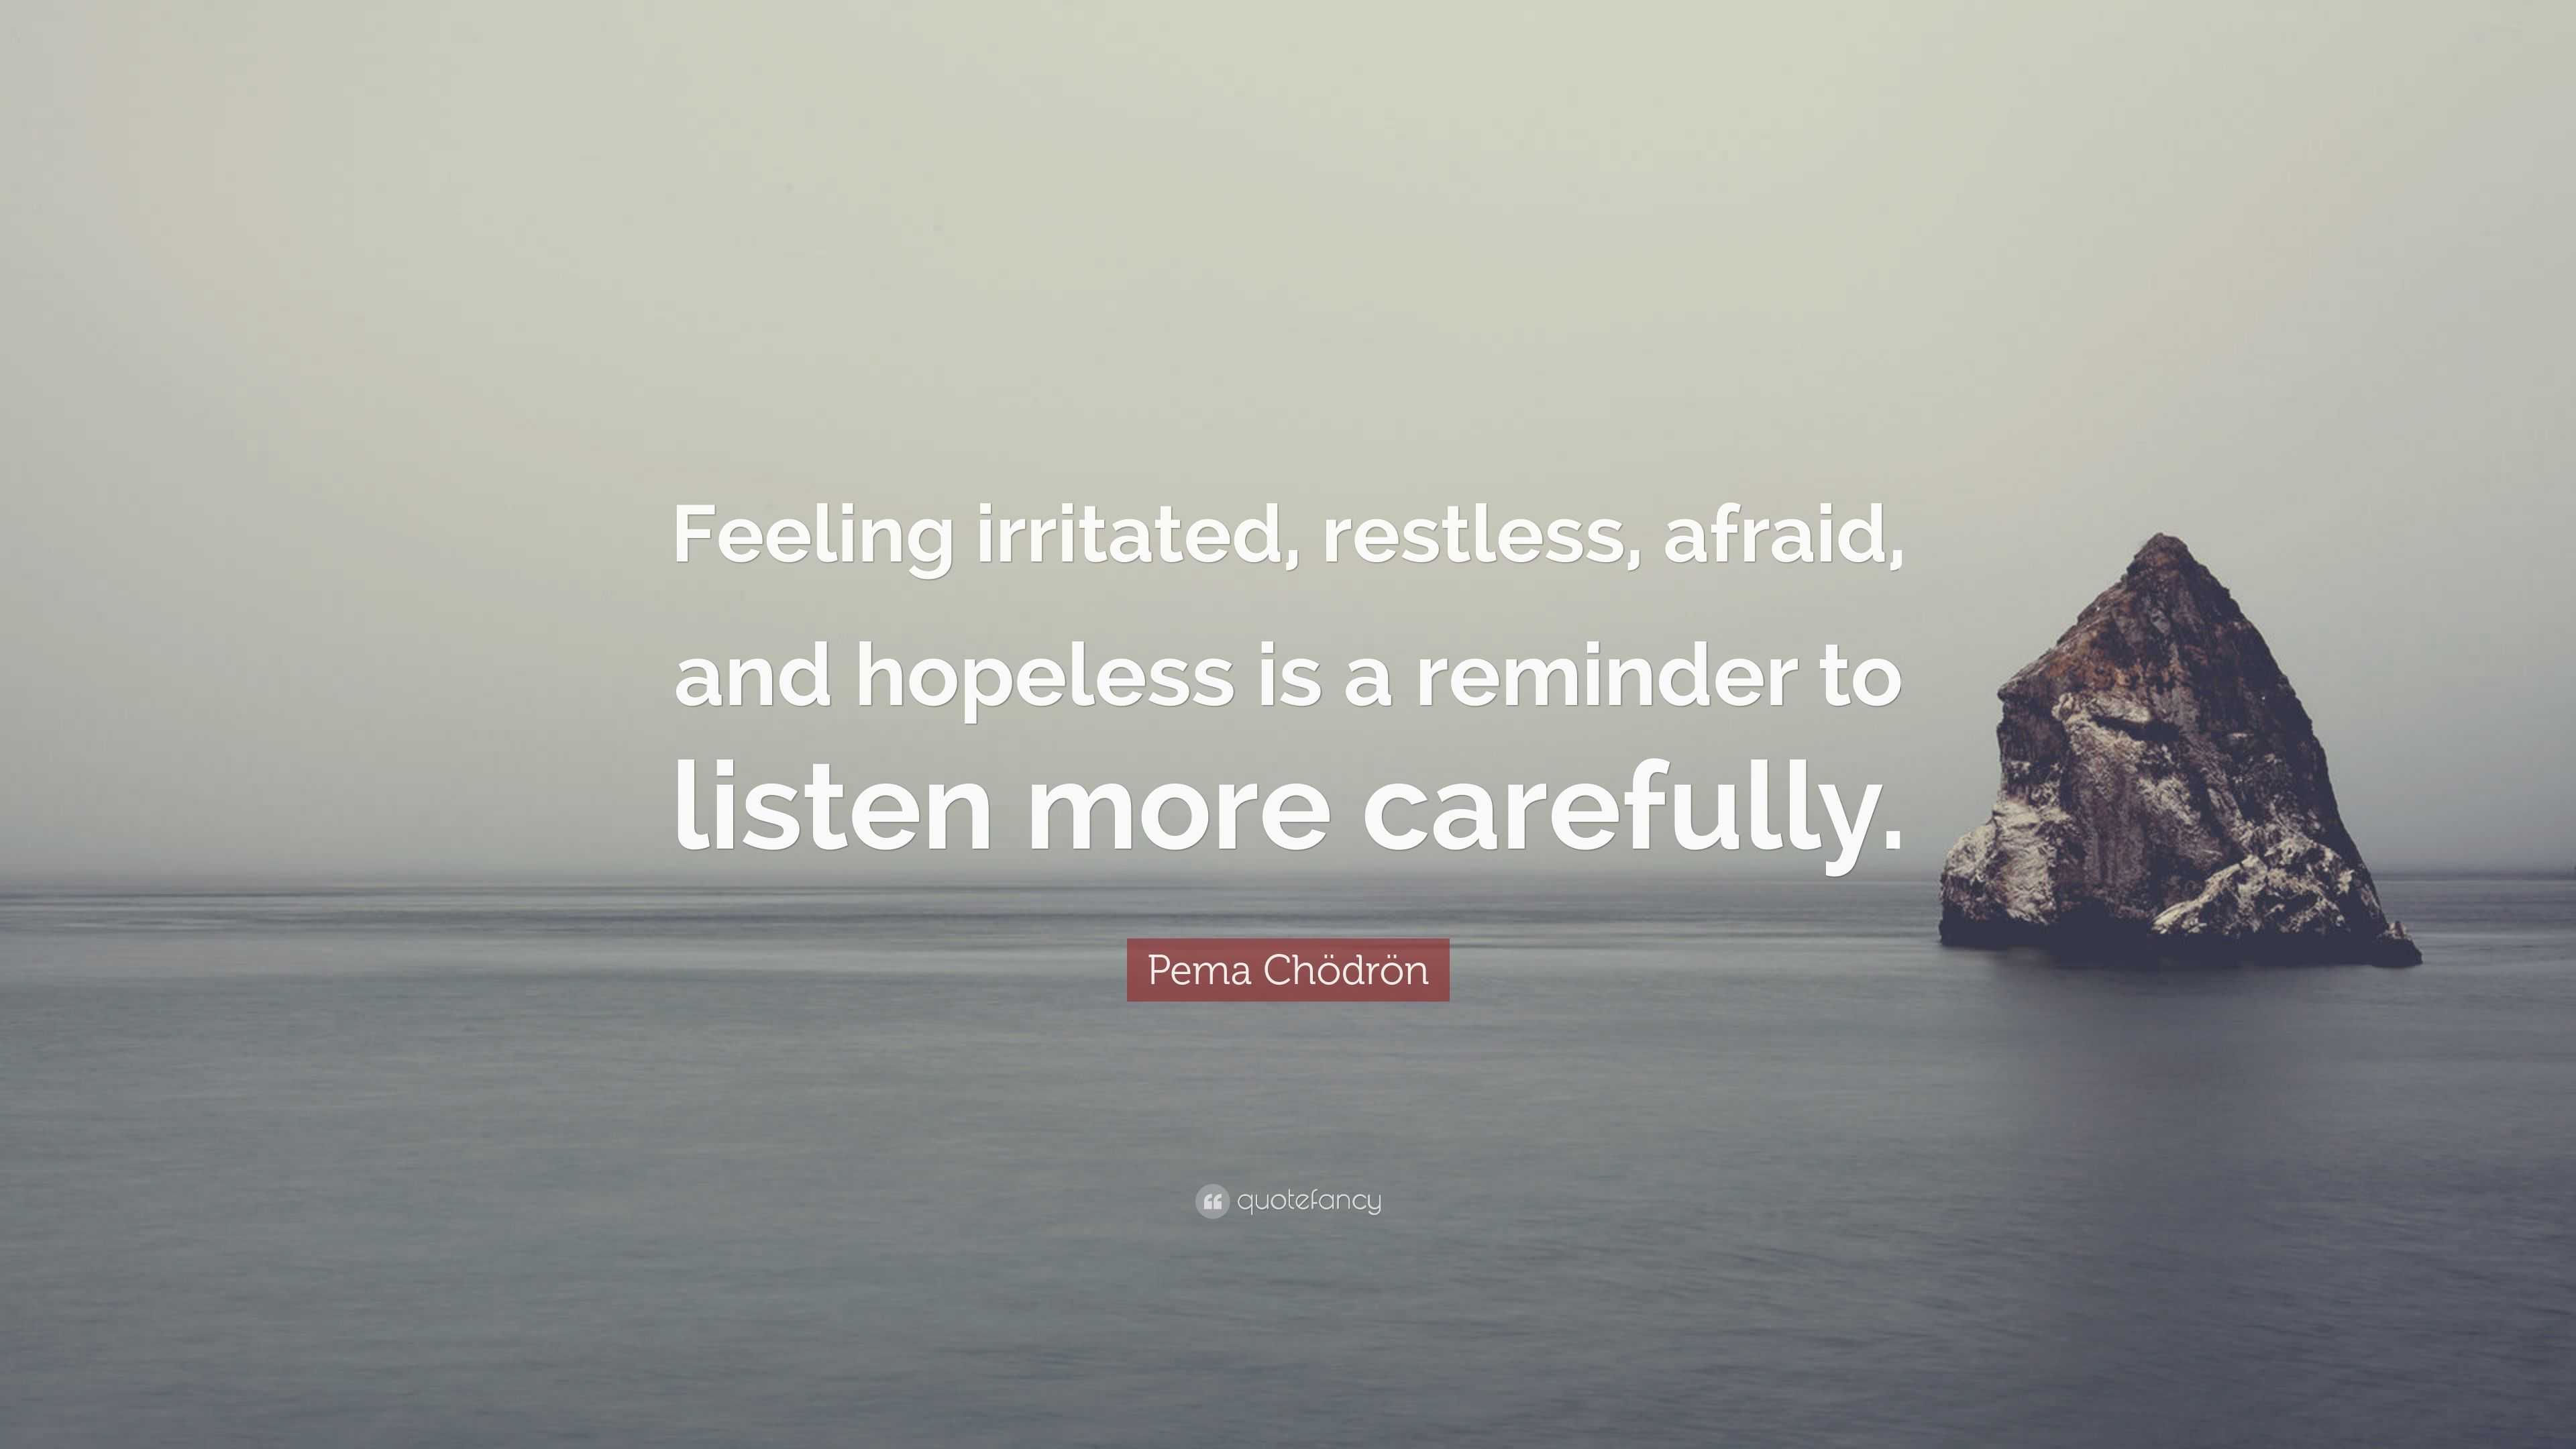 Pema Chödrön Quote: “Feeling irritated, restless, afraid, and hopeless ...